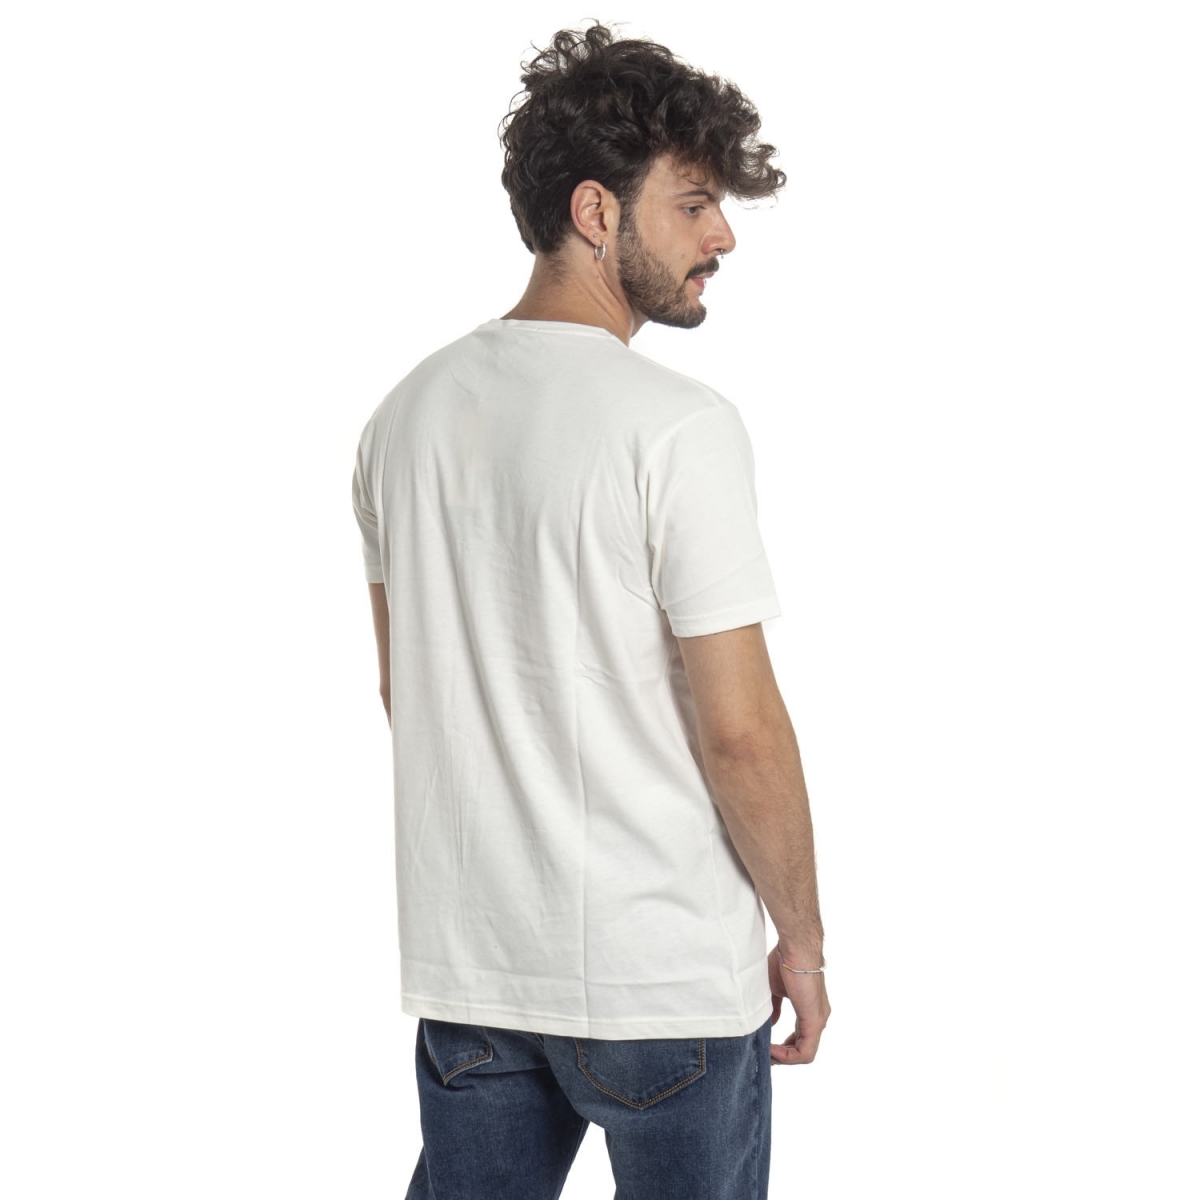 clothing T-shirt men T-Shirt LPX16-32 LANDEK PARK Cafedelmar Shop